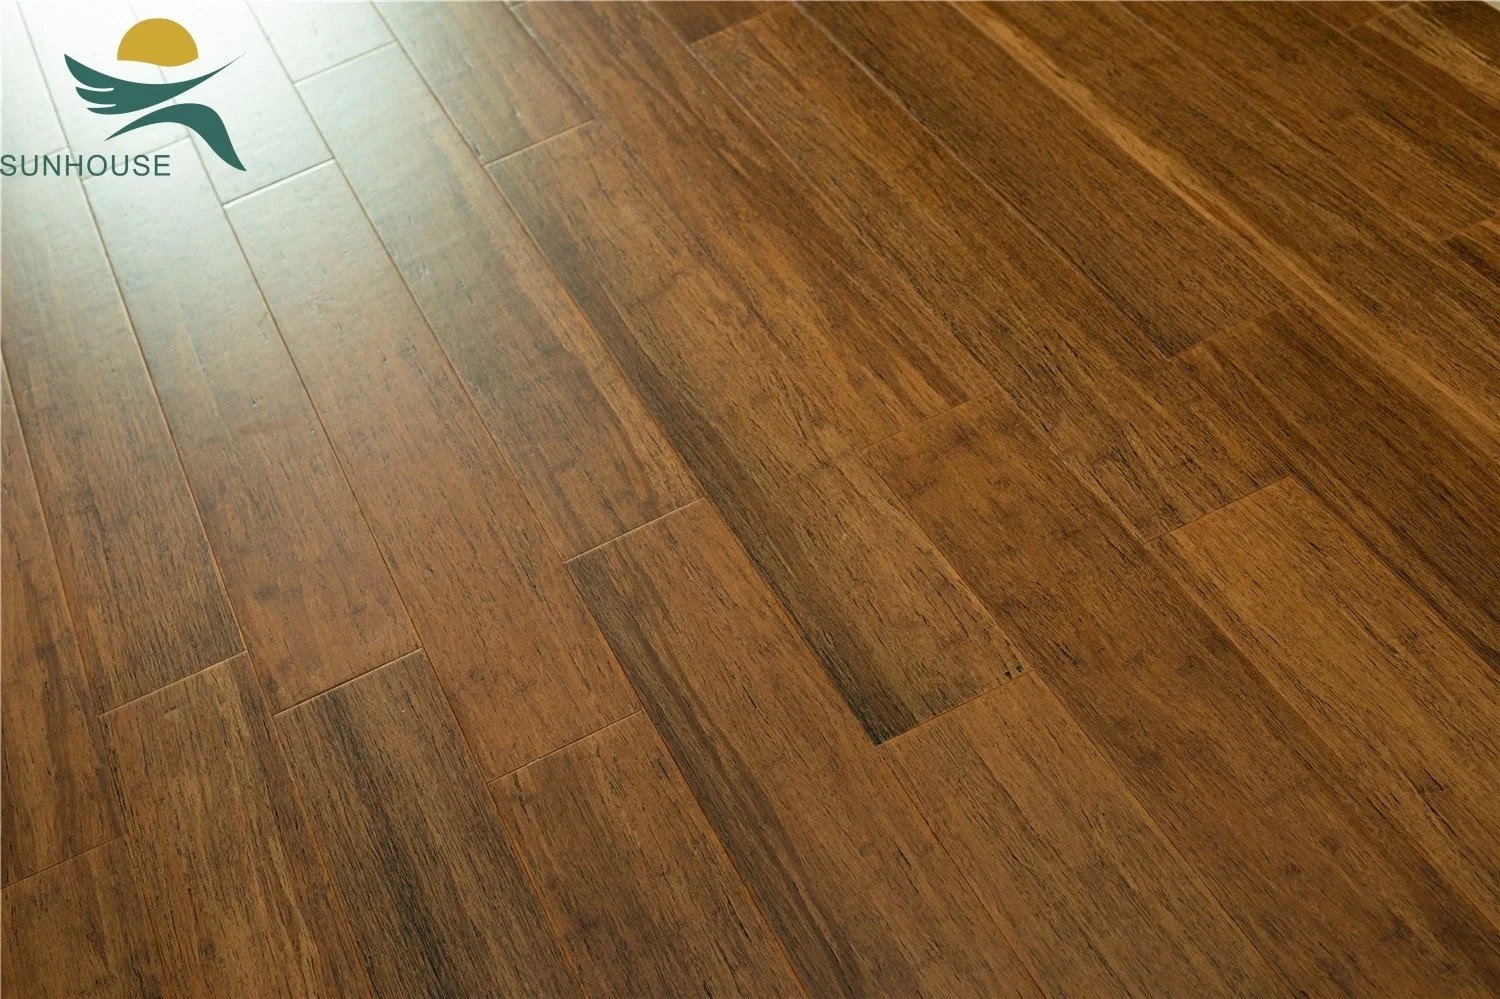 Wide Bamboo Plank Strand Woven Bamboo Flooring Underfloor Heating Floor Tiles 14/15mm Floor Made in China